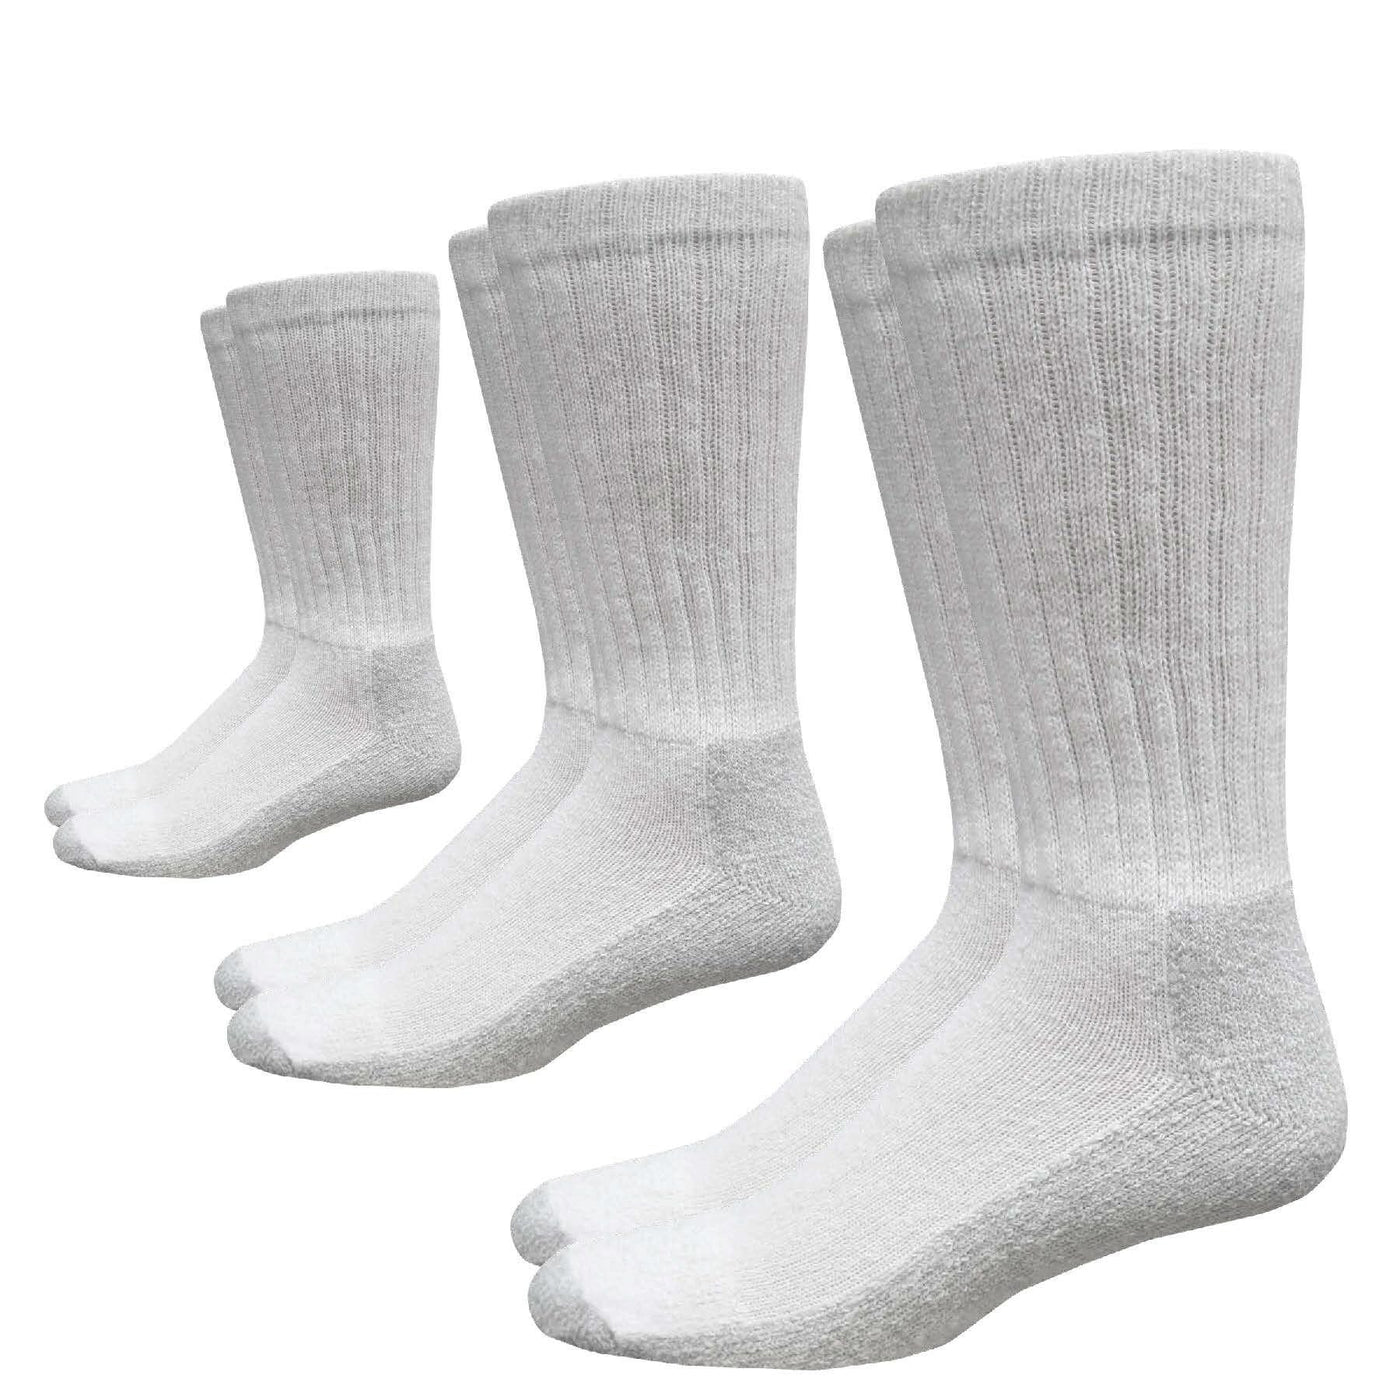 Foot Comfort Everyday Steel Toe Cotton Crew Socks 3 PAIRS